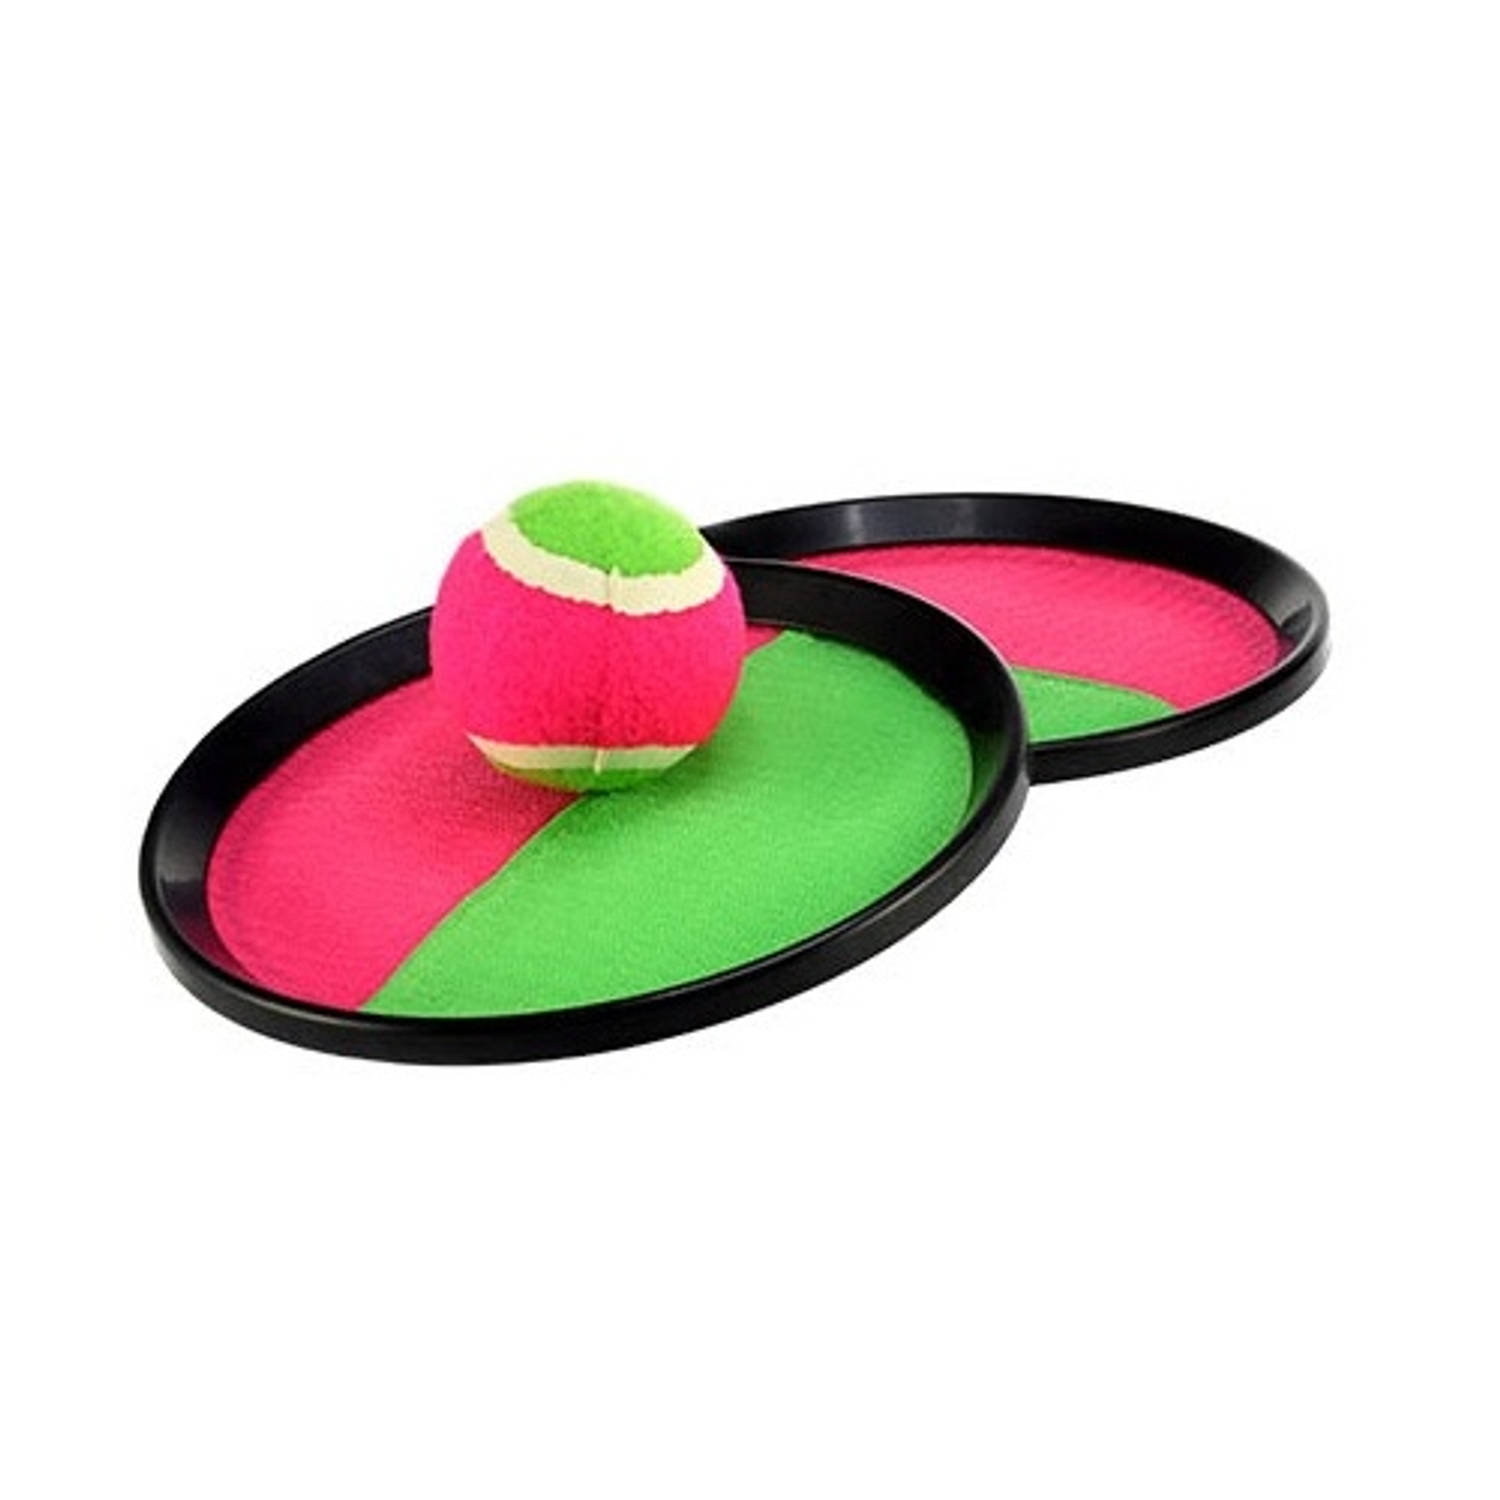 Toi-Toys vangspel klittenband groen/roze 18 cm